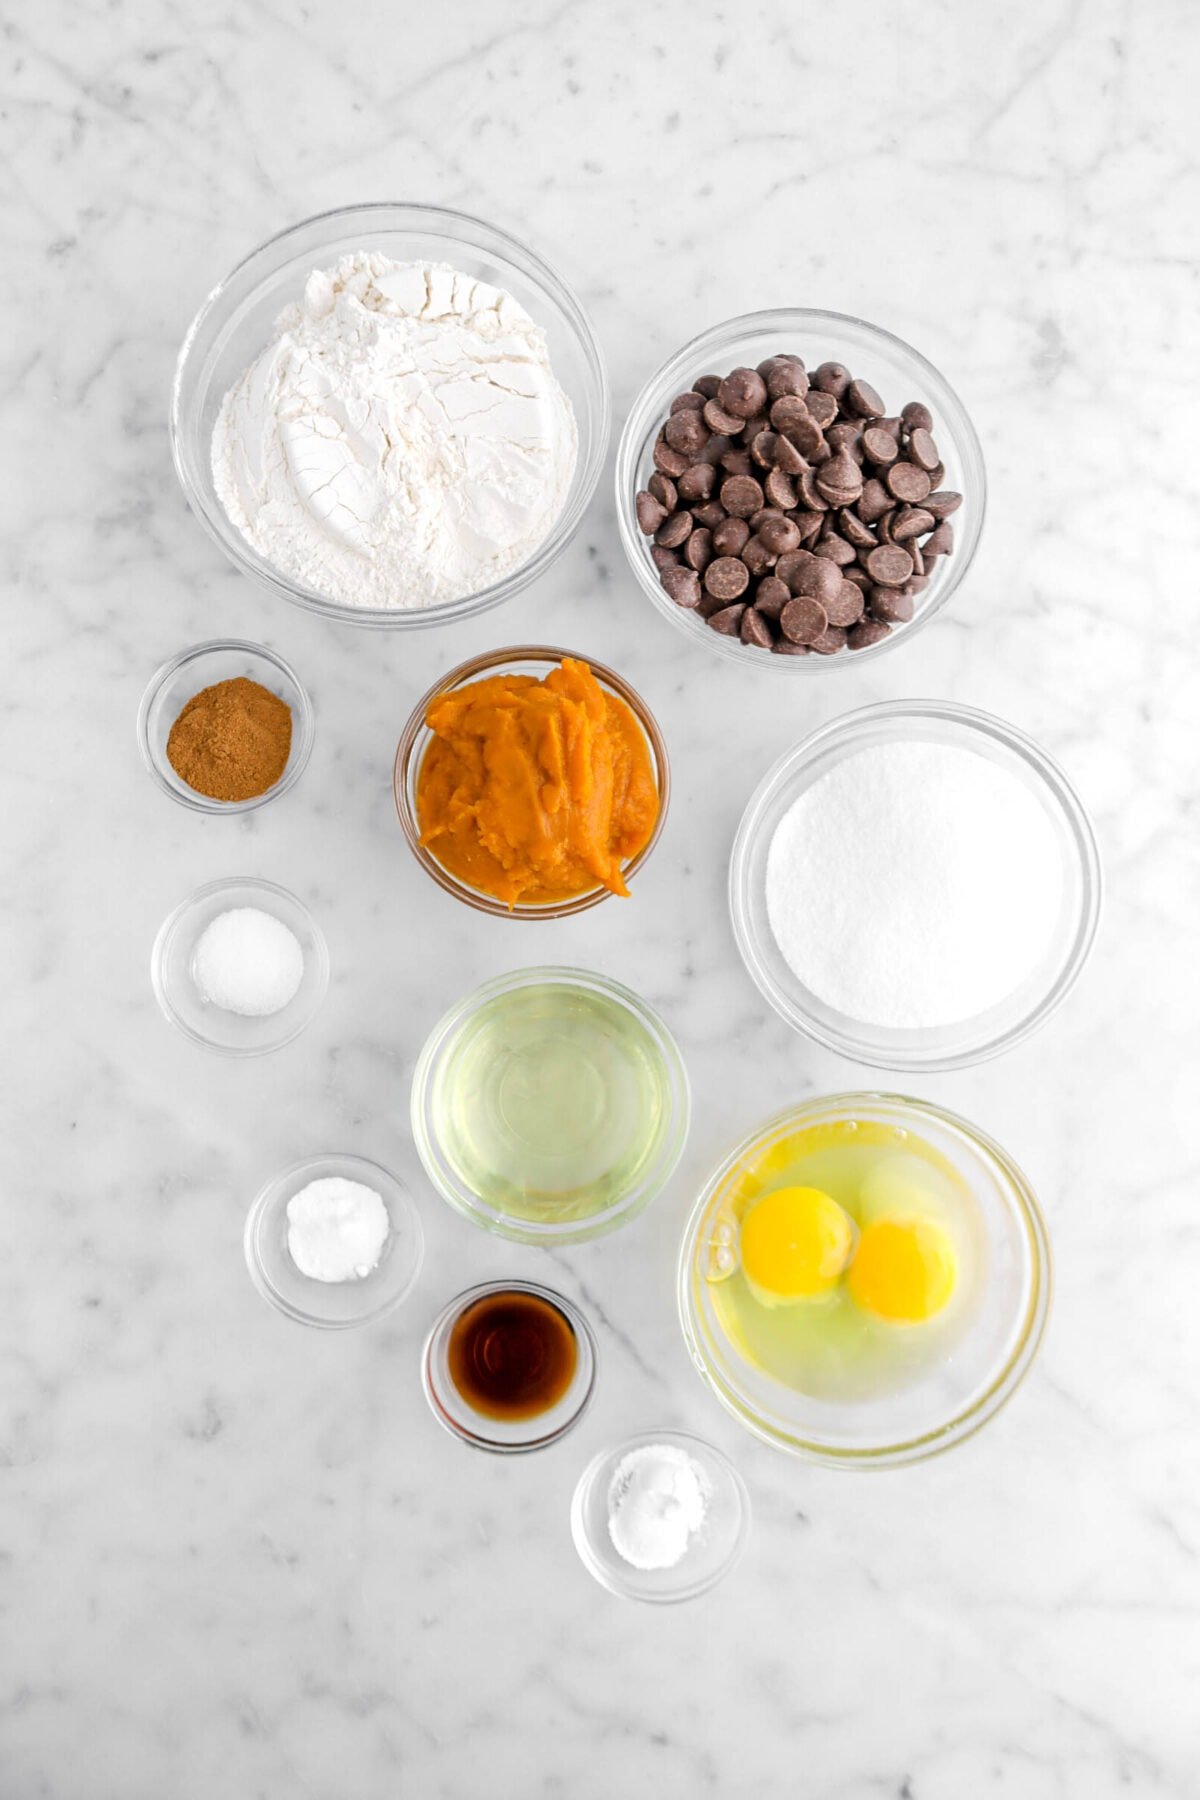 flour, chocolate chips, pumpkin pie spice, pumpkin purée, sugar, salt, baking soda, baking powder, vanilla, vegetable oil, and eggs on marble surface.